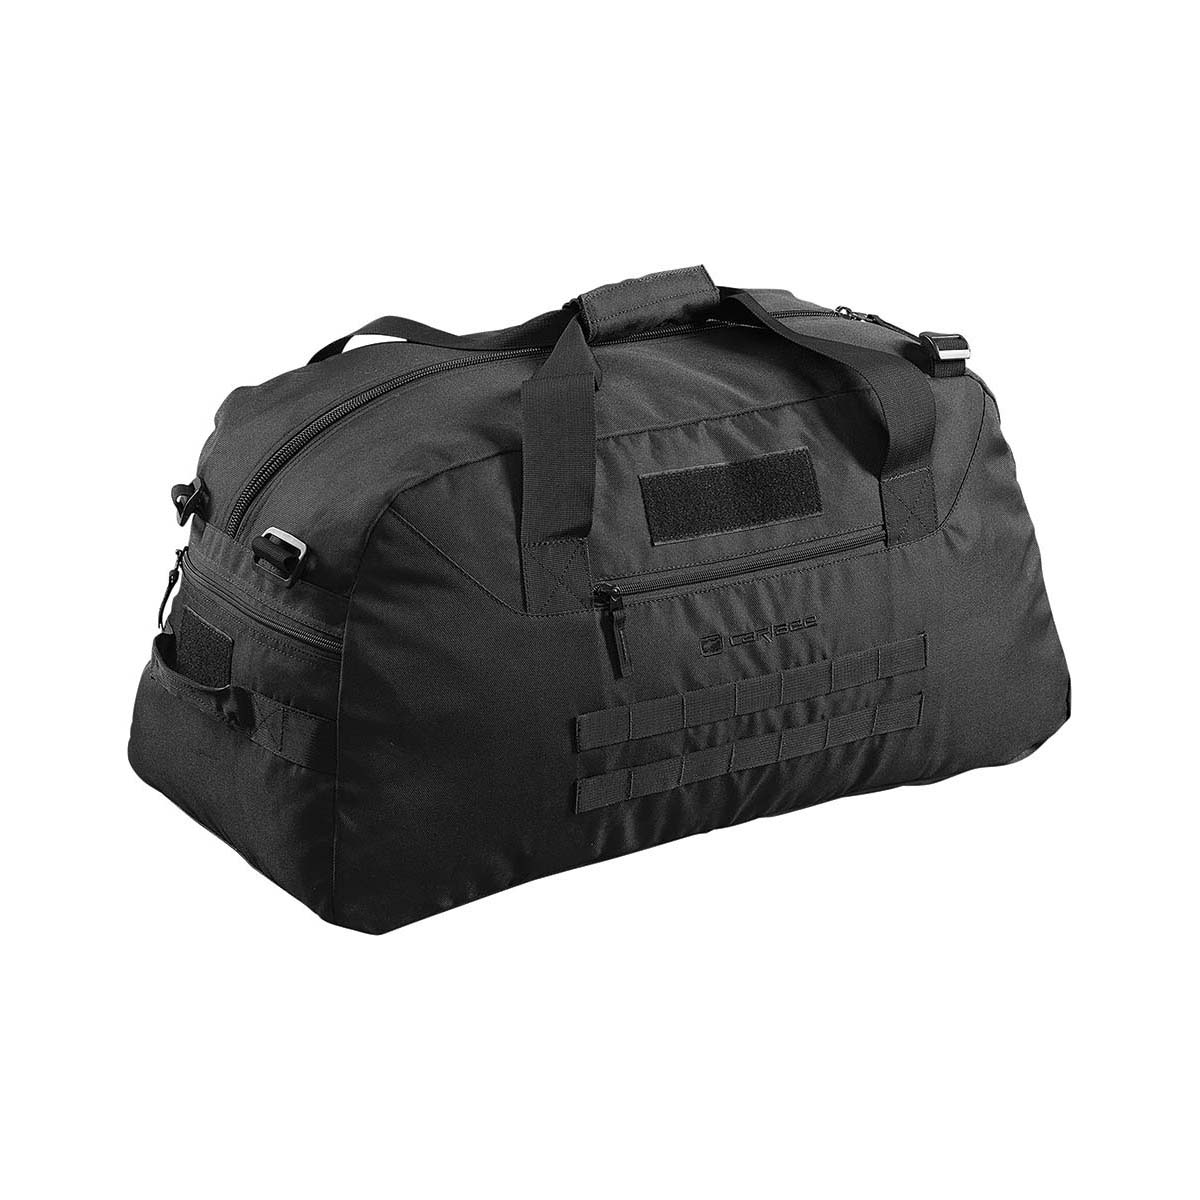 Caribee Ops Duffle Bag Black 65L